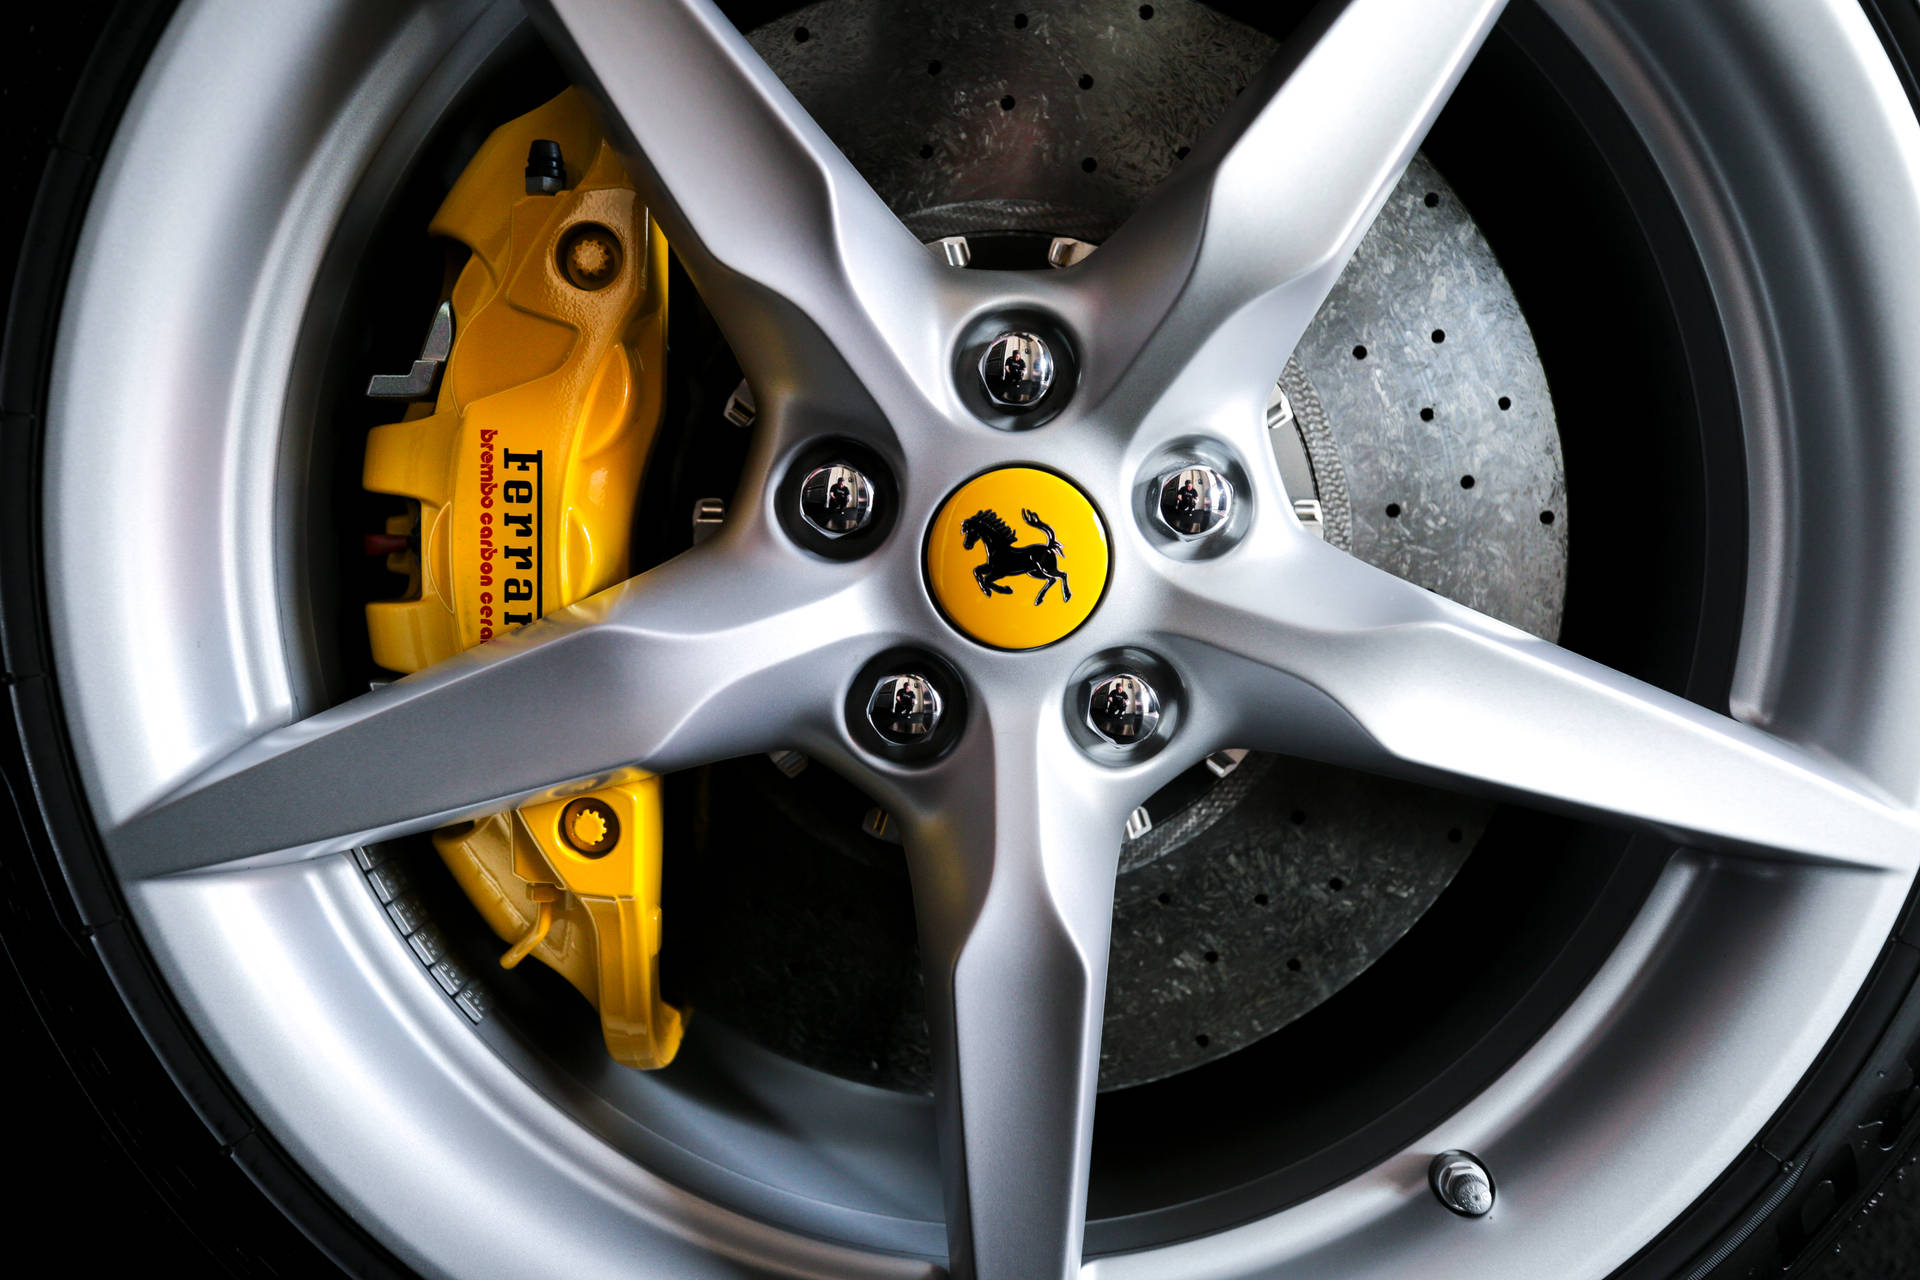 Metallic silver 5-spoke wheel of Ferrari sports car wallpaper.